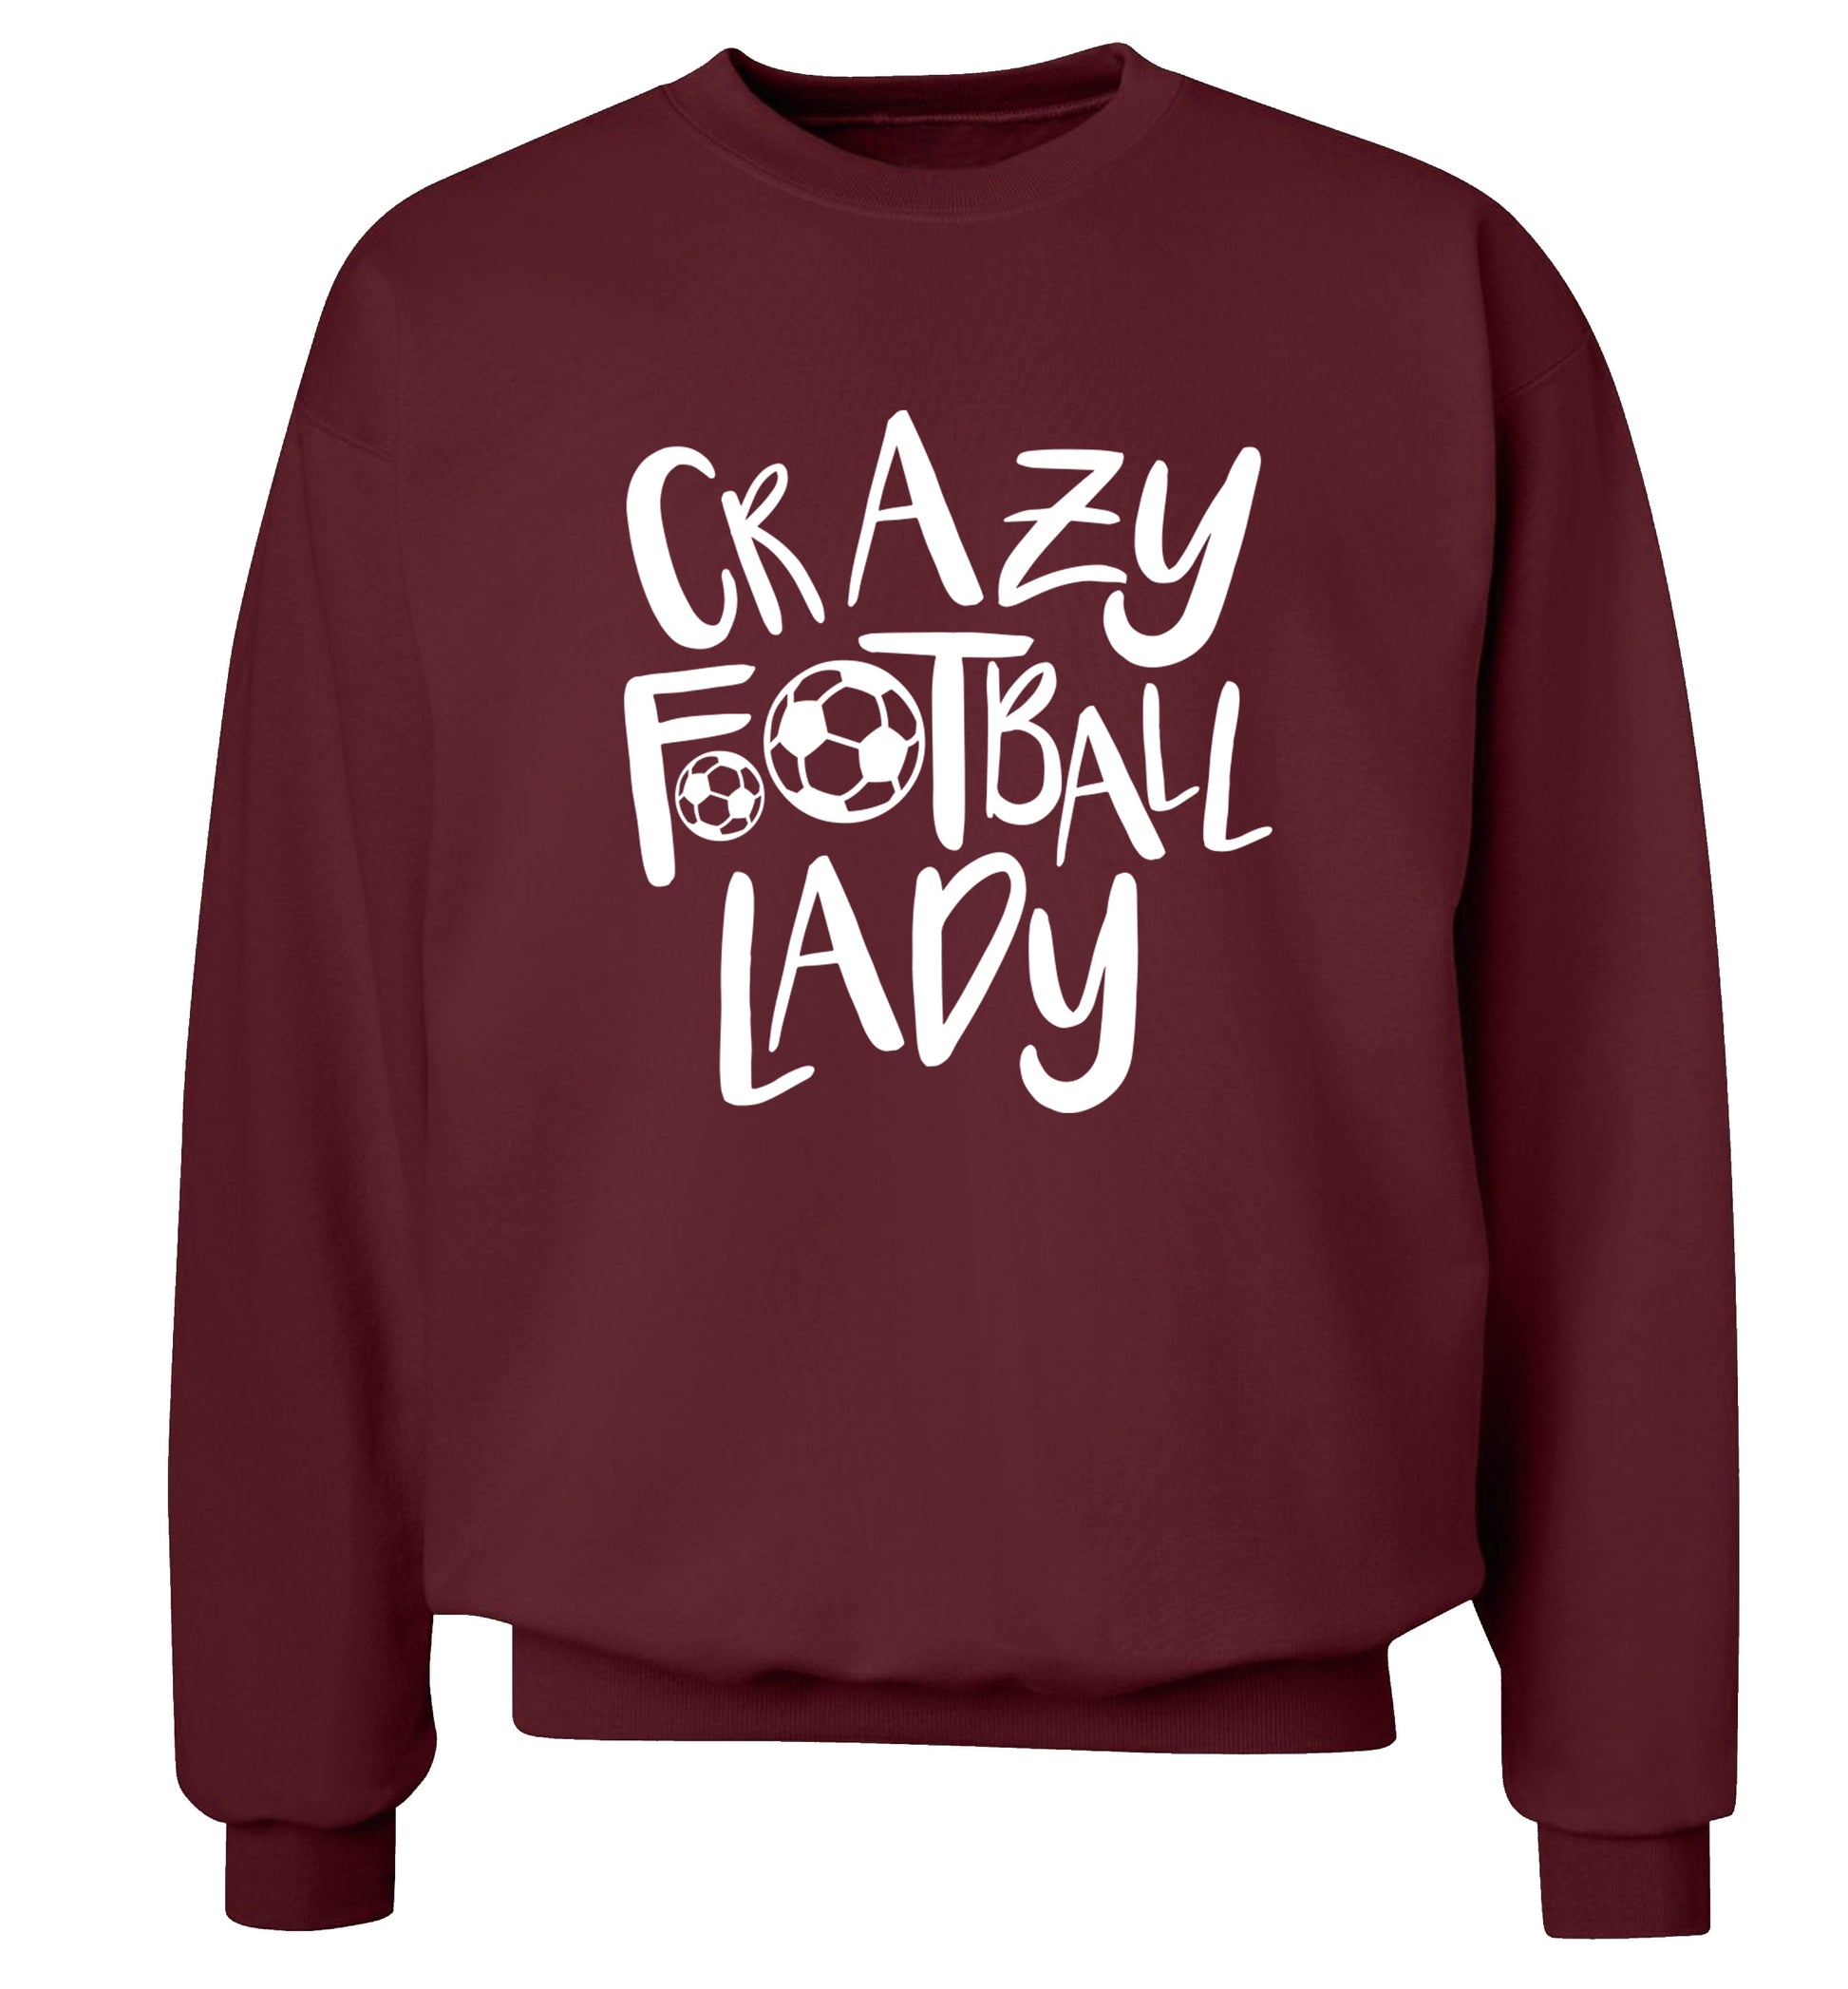 Crazy football lady Adult's unisexmaroon Sweater 2XL